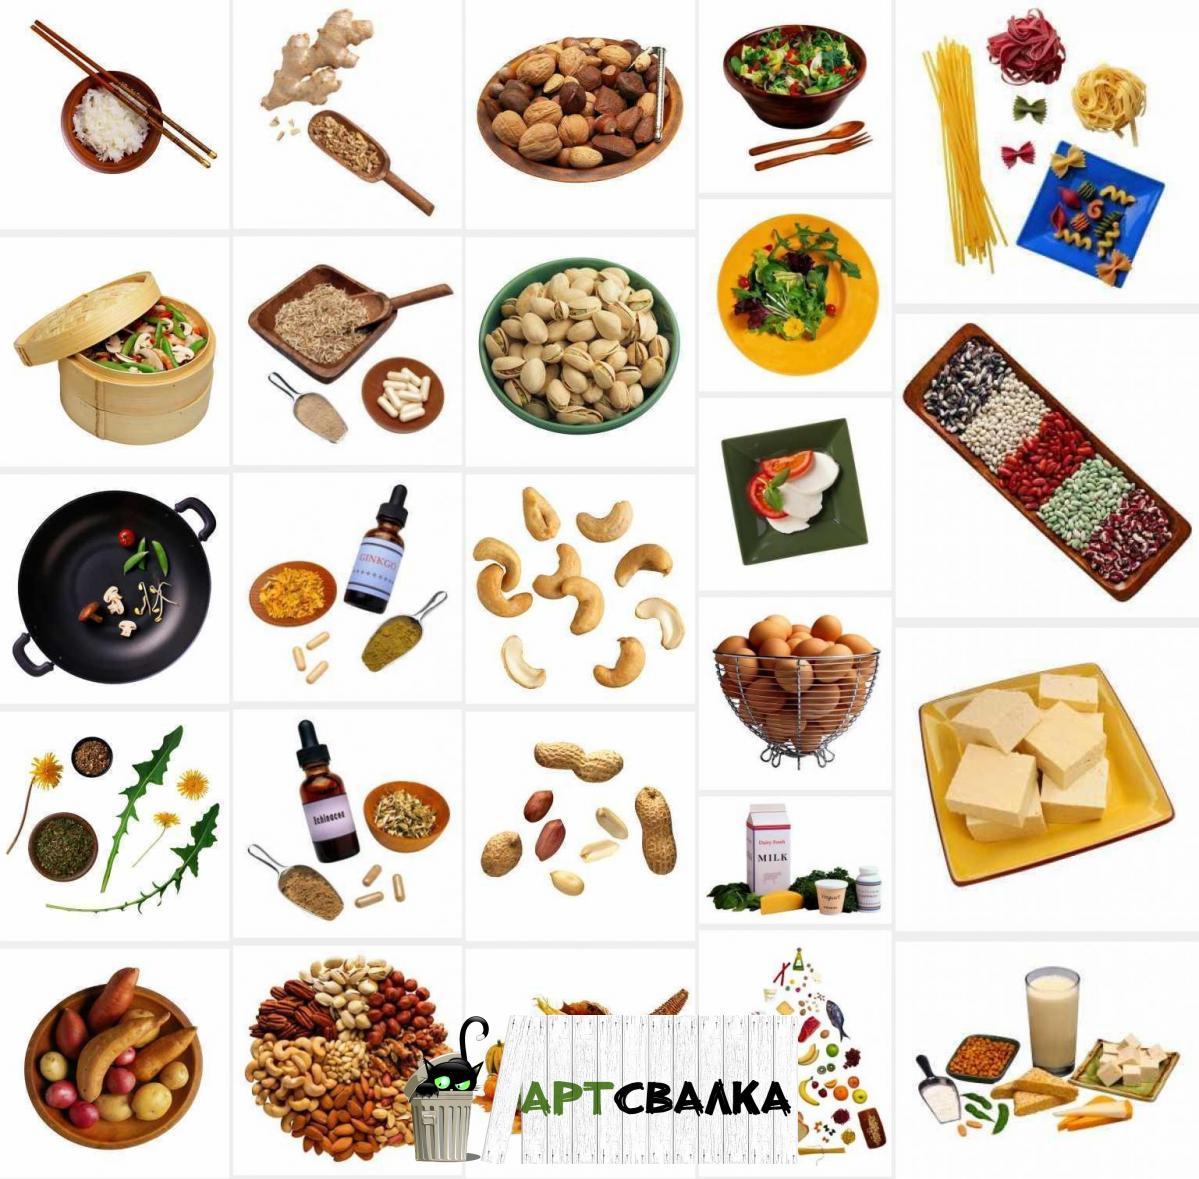 Пищевая пирамида и тарелочки с едой | Food pyramid and plates of food